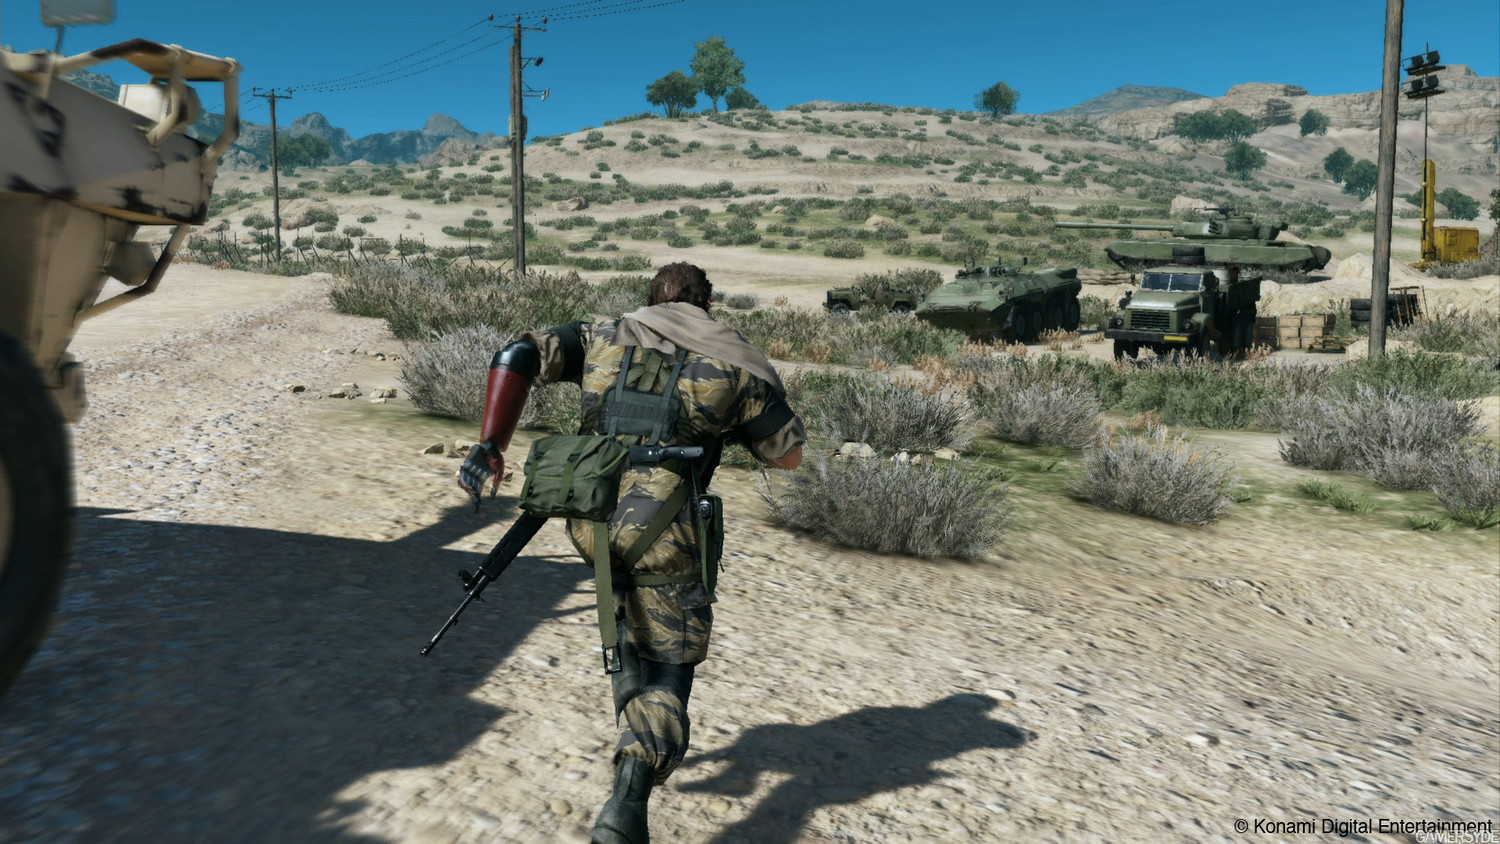 Скриншот 1 к игре Metal Gear Solid V: The Phantom Pain [v 1.15] (2015) PC | Repack от xatab